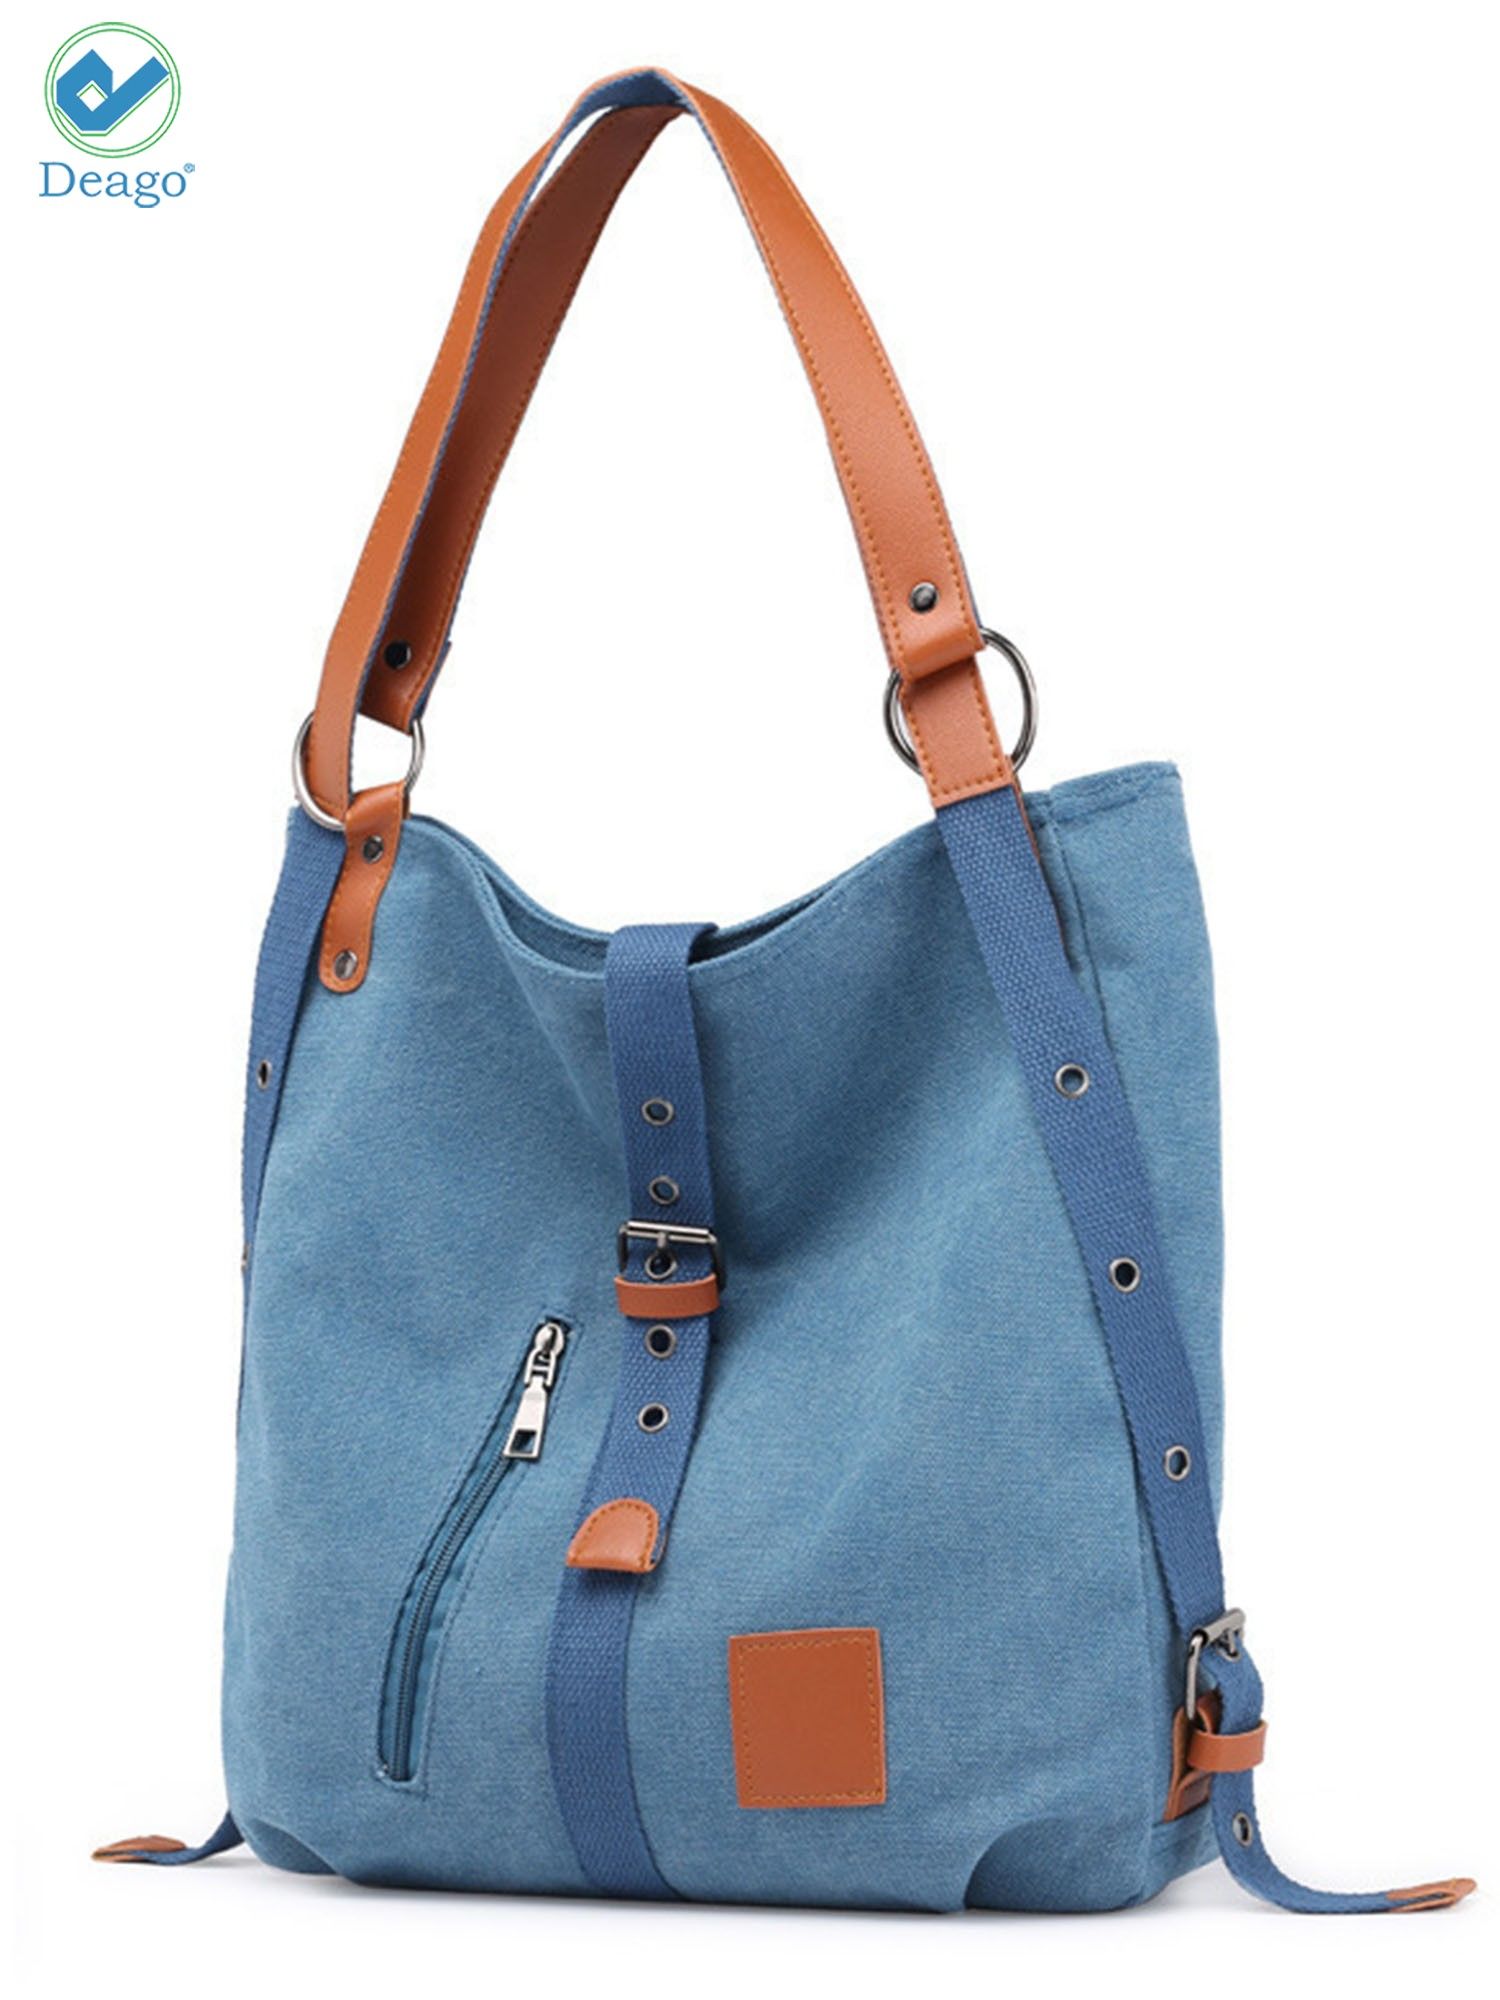 Deago Purse Handbag for Women Canvas Tote Bag Casual Shoulder Bag School Bag Rucksack Convertible Backpack (Blue) - image 2 of 10